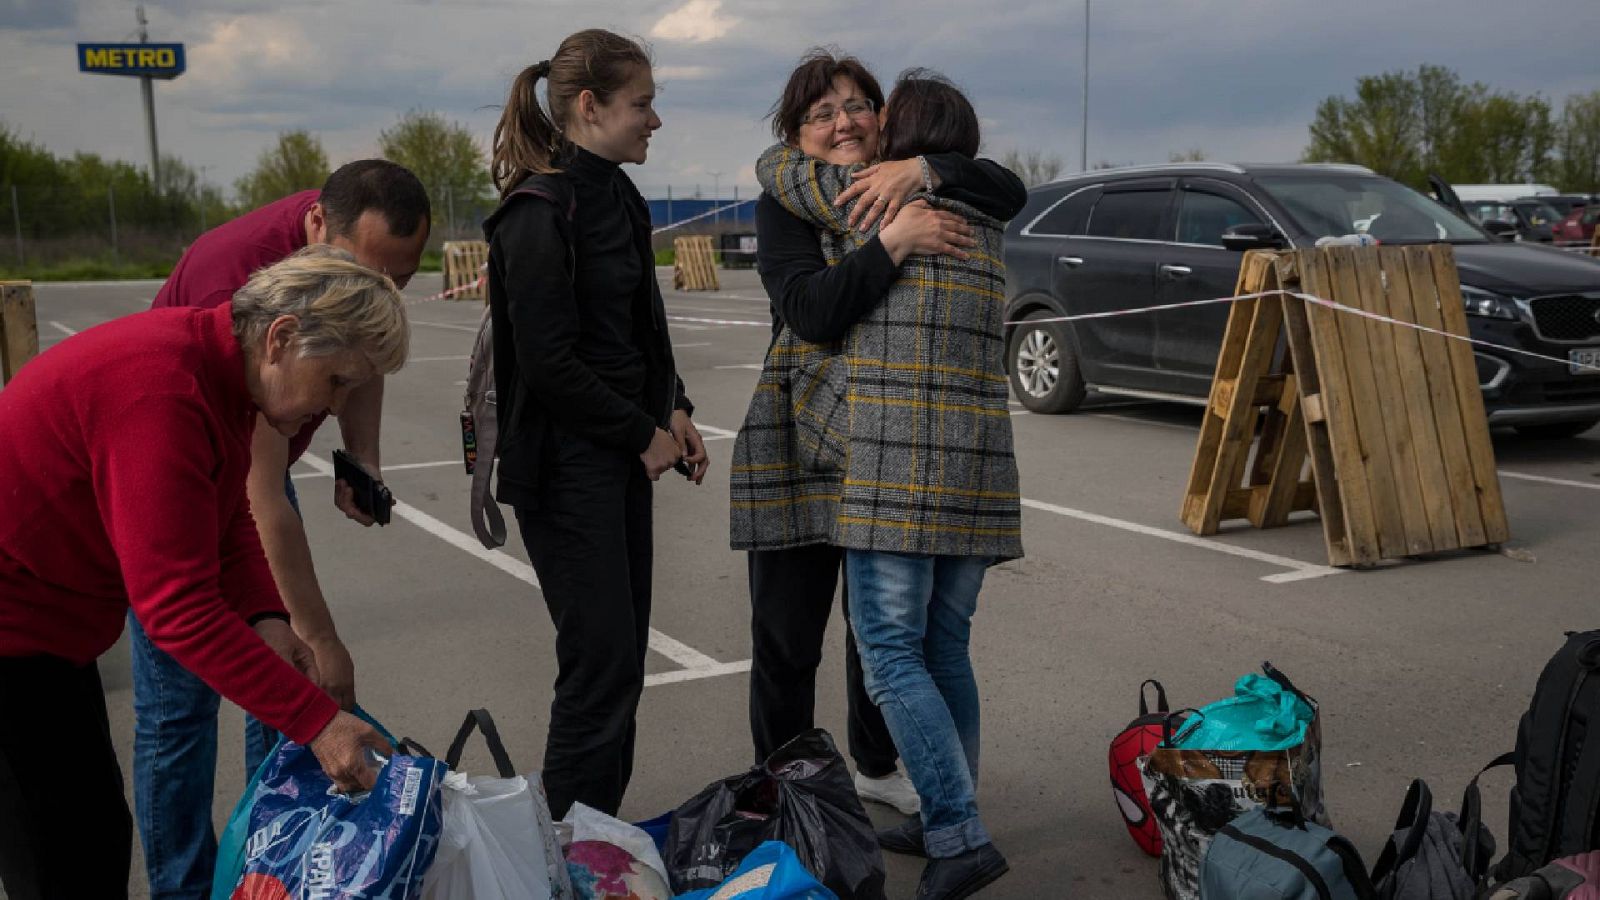 14 horas - Evacuados de Mariúpol: "Teníamos mucho miedo, era un infierno" - Escuchar ahora